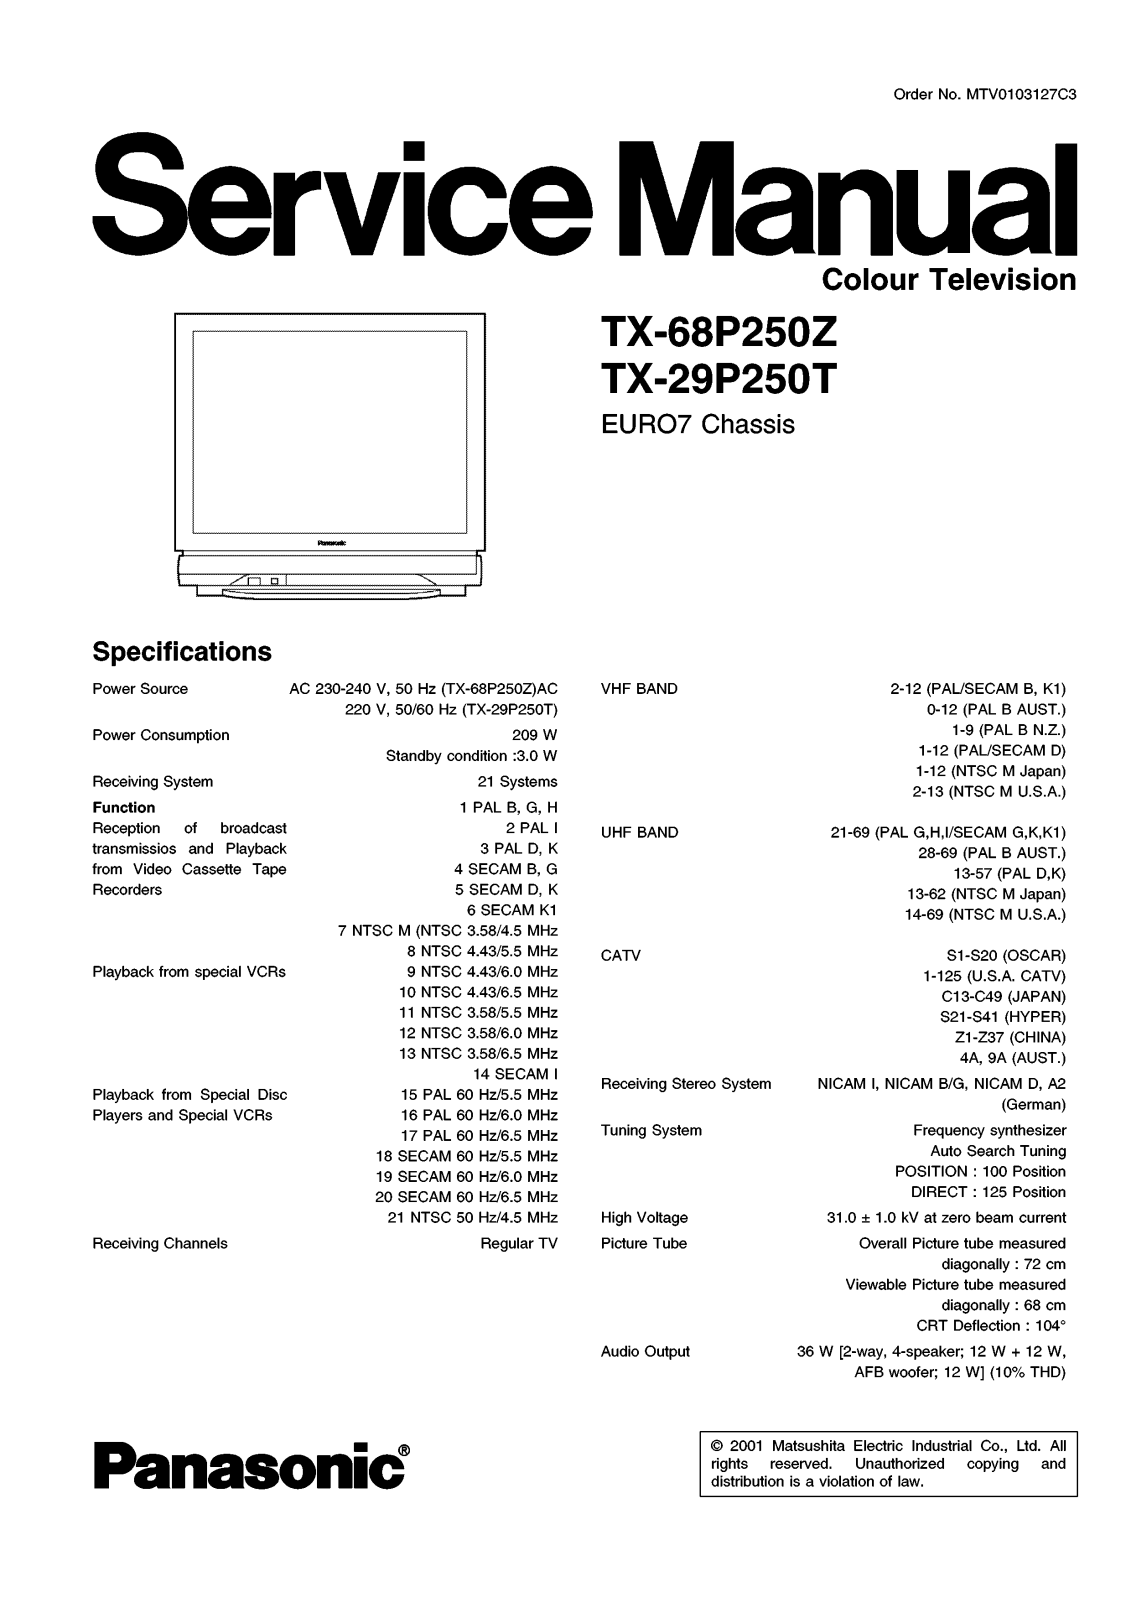 Panasonic TX-68P250Z Service Manual